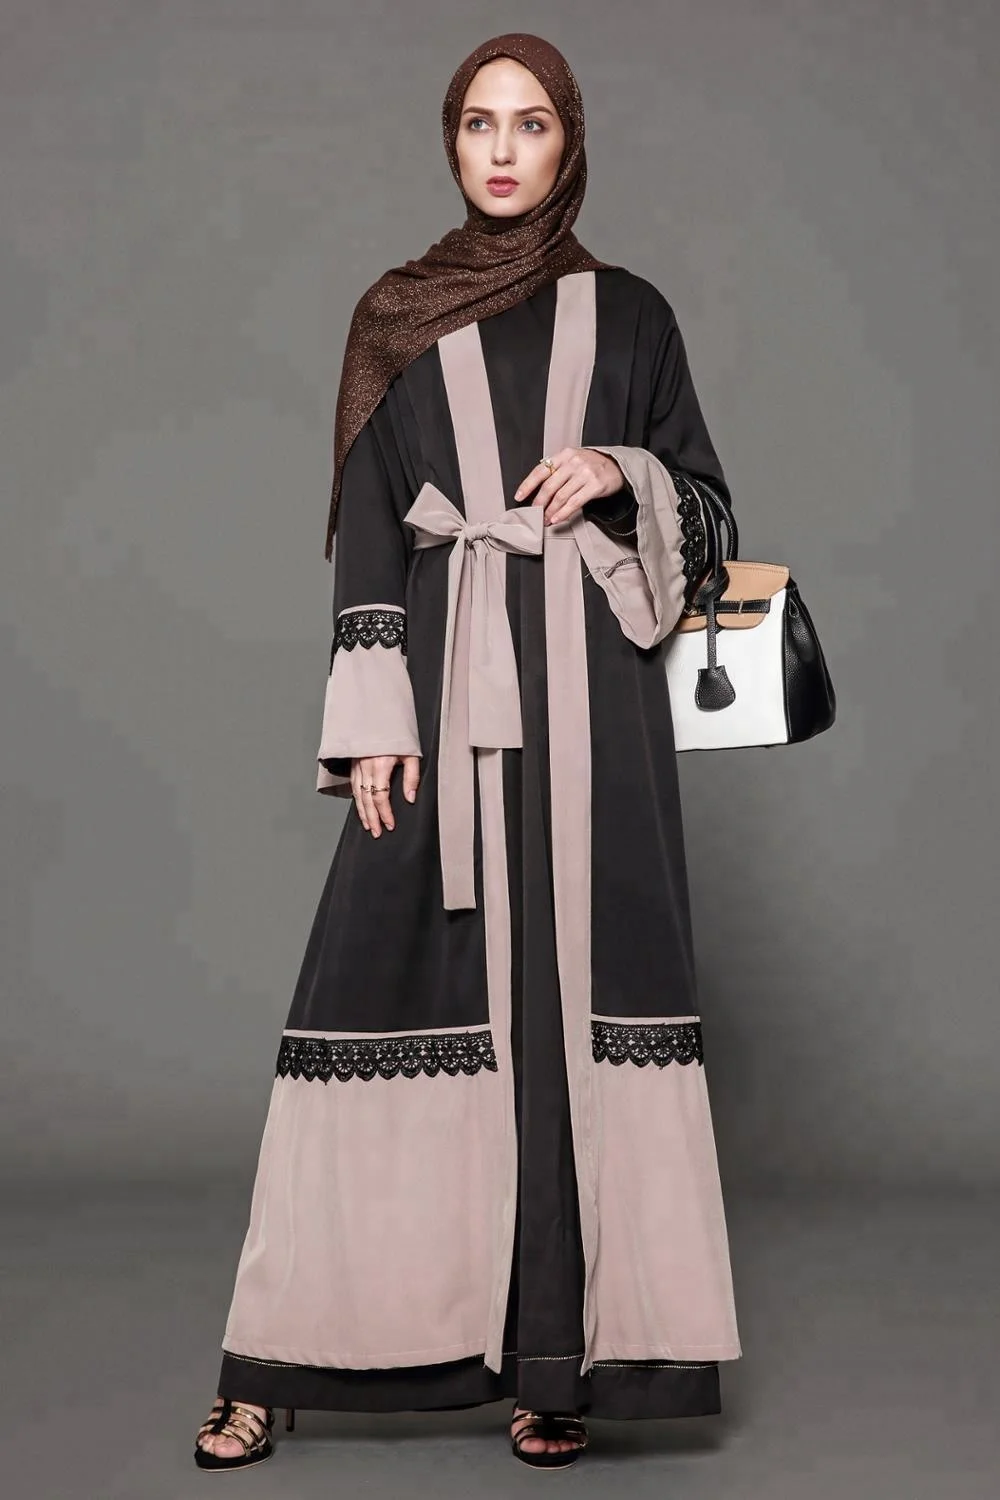 1558# Long Sleeve Lace Trim Indonesia Baju Muslimah 2018 Latest Design ...